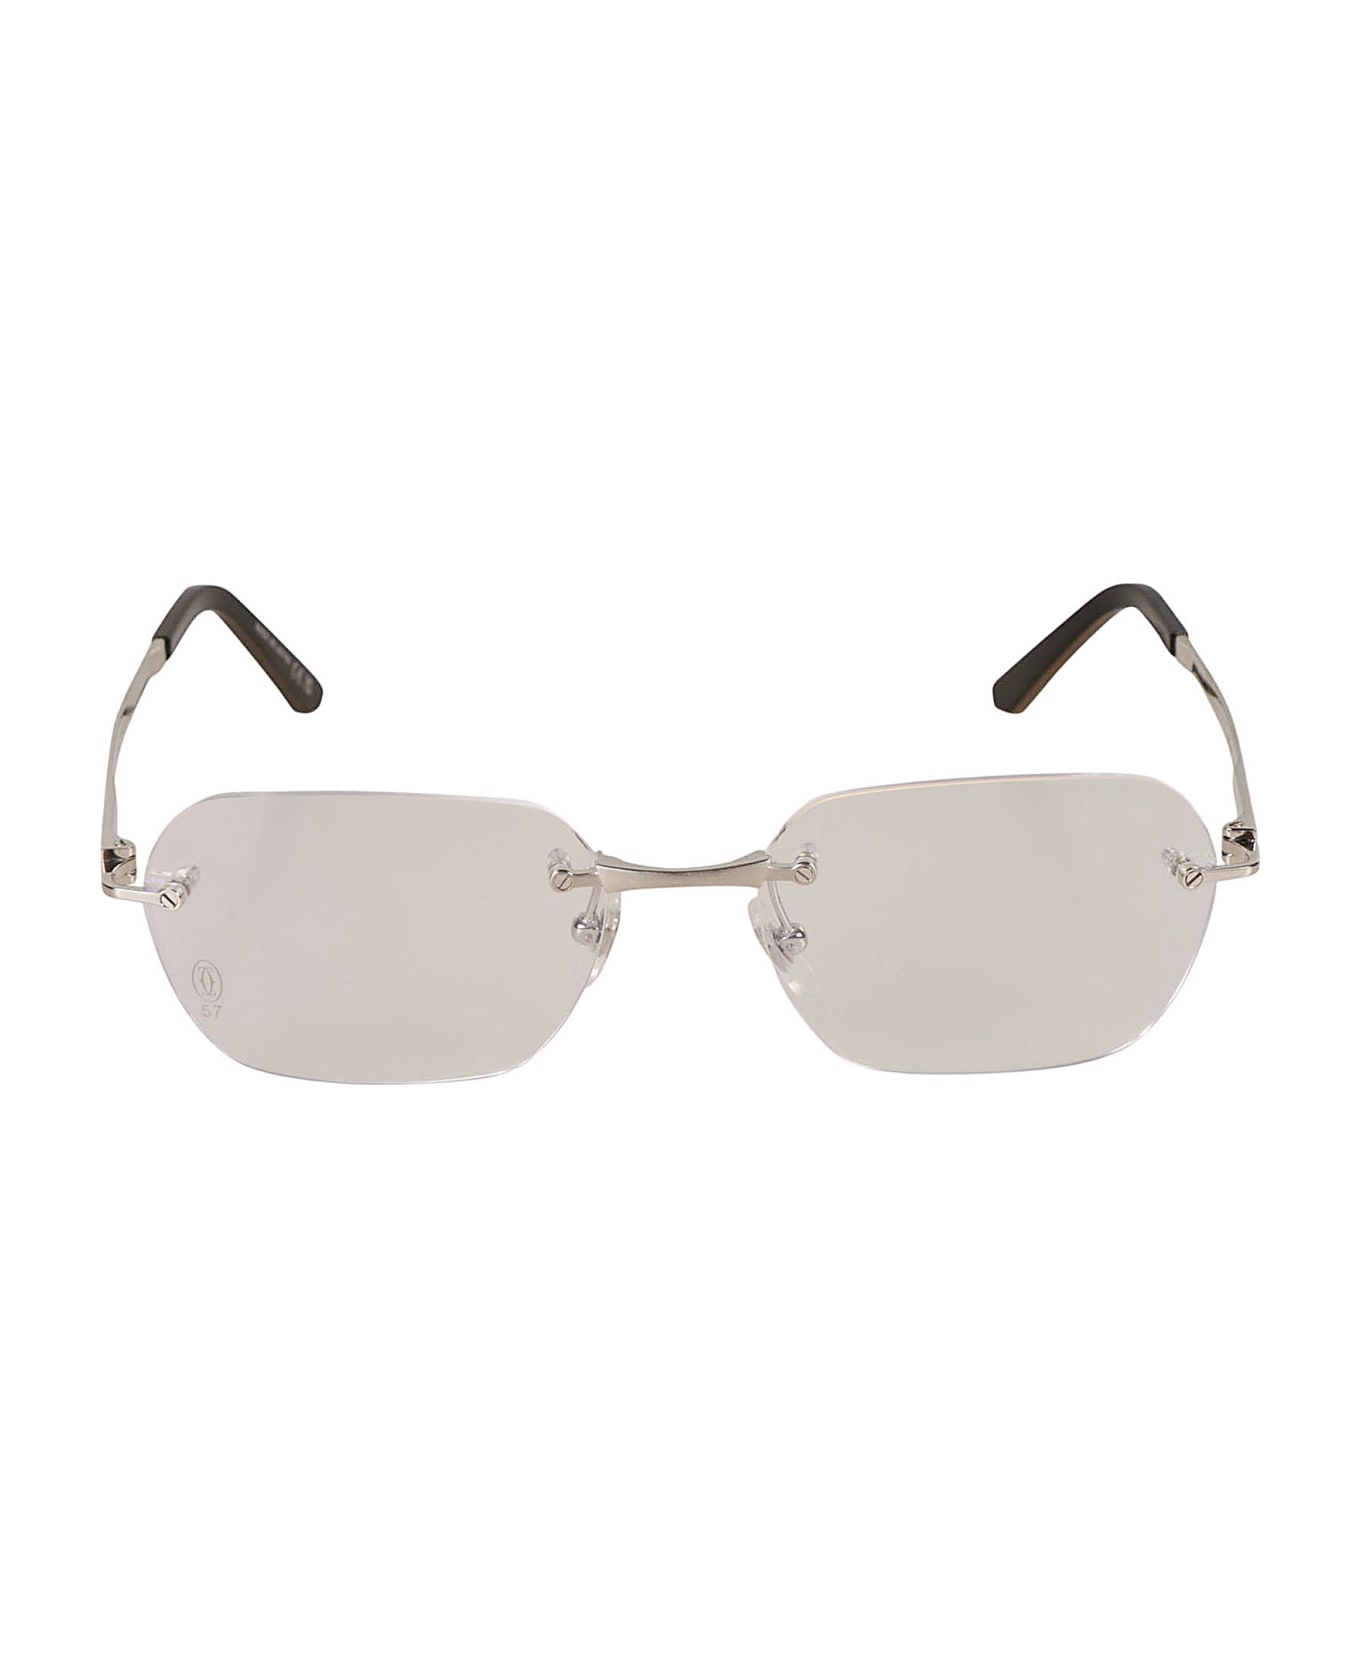 Cartier Eyewear Clear Classic Frameless Sunglasses Sunglasses - Silver サングラス